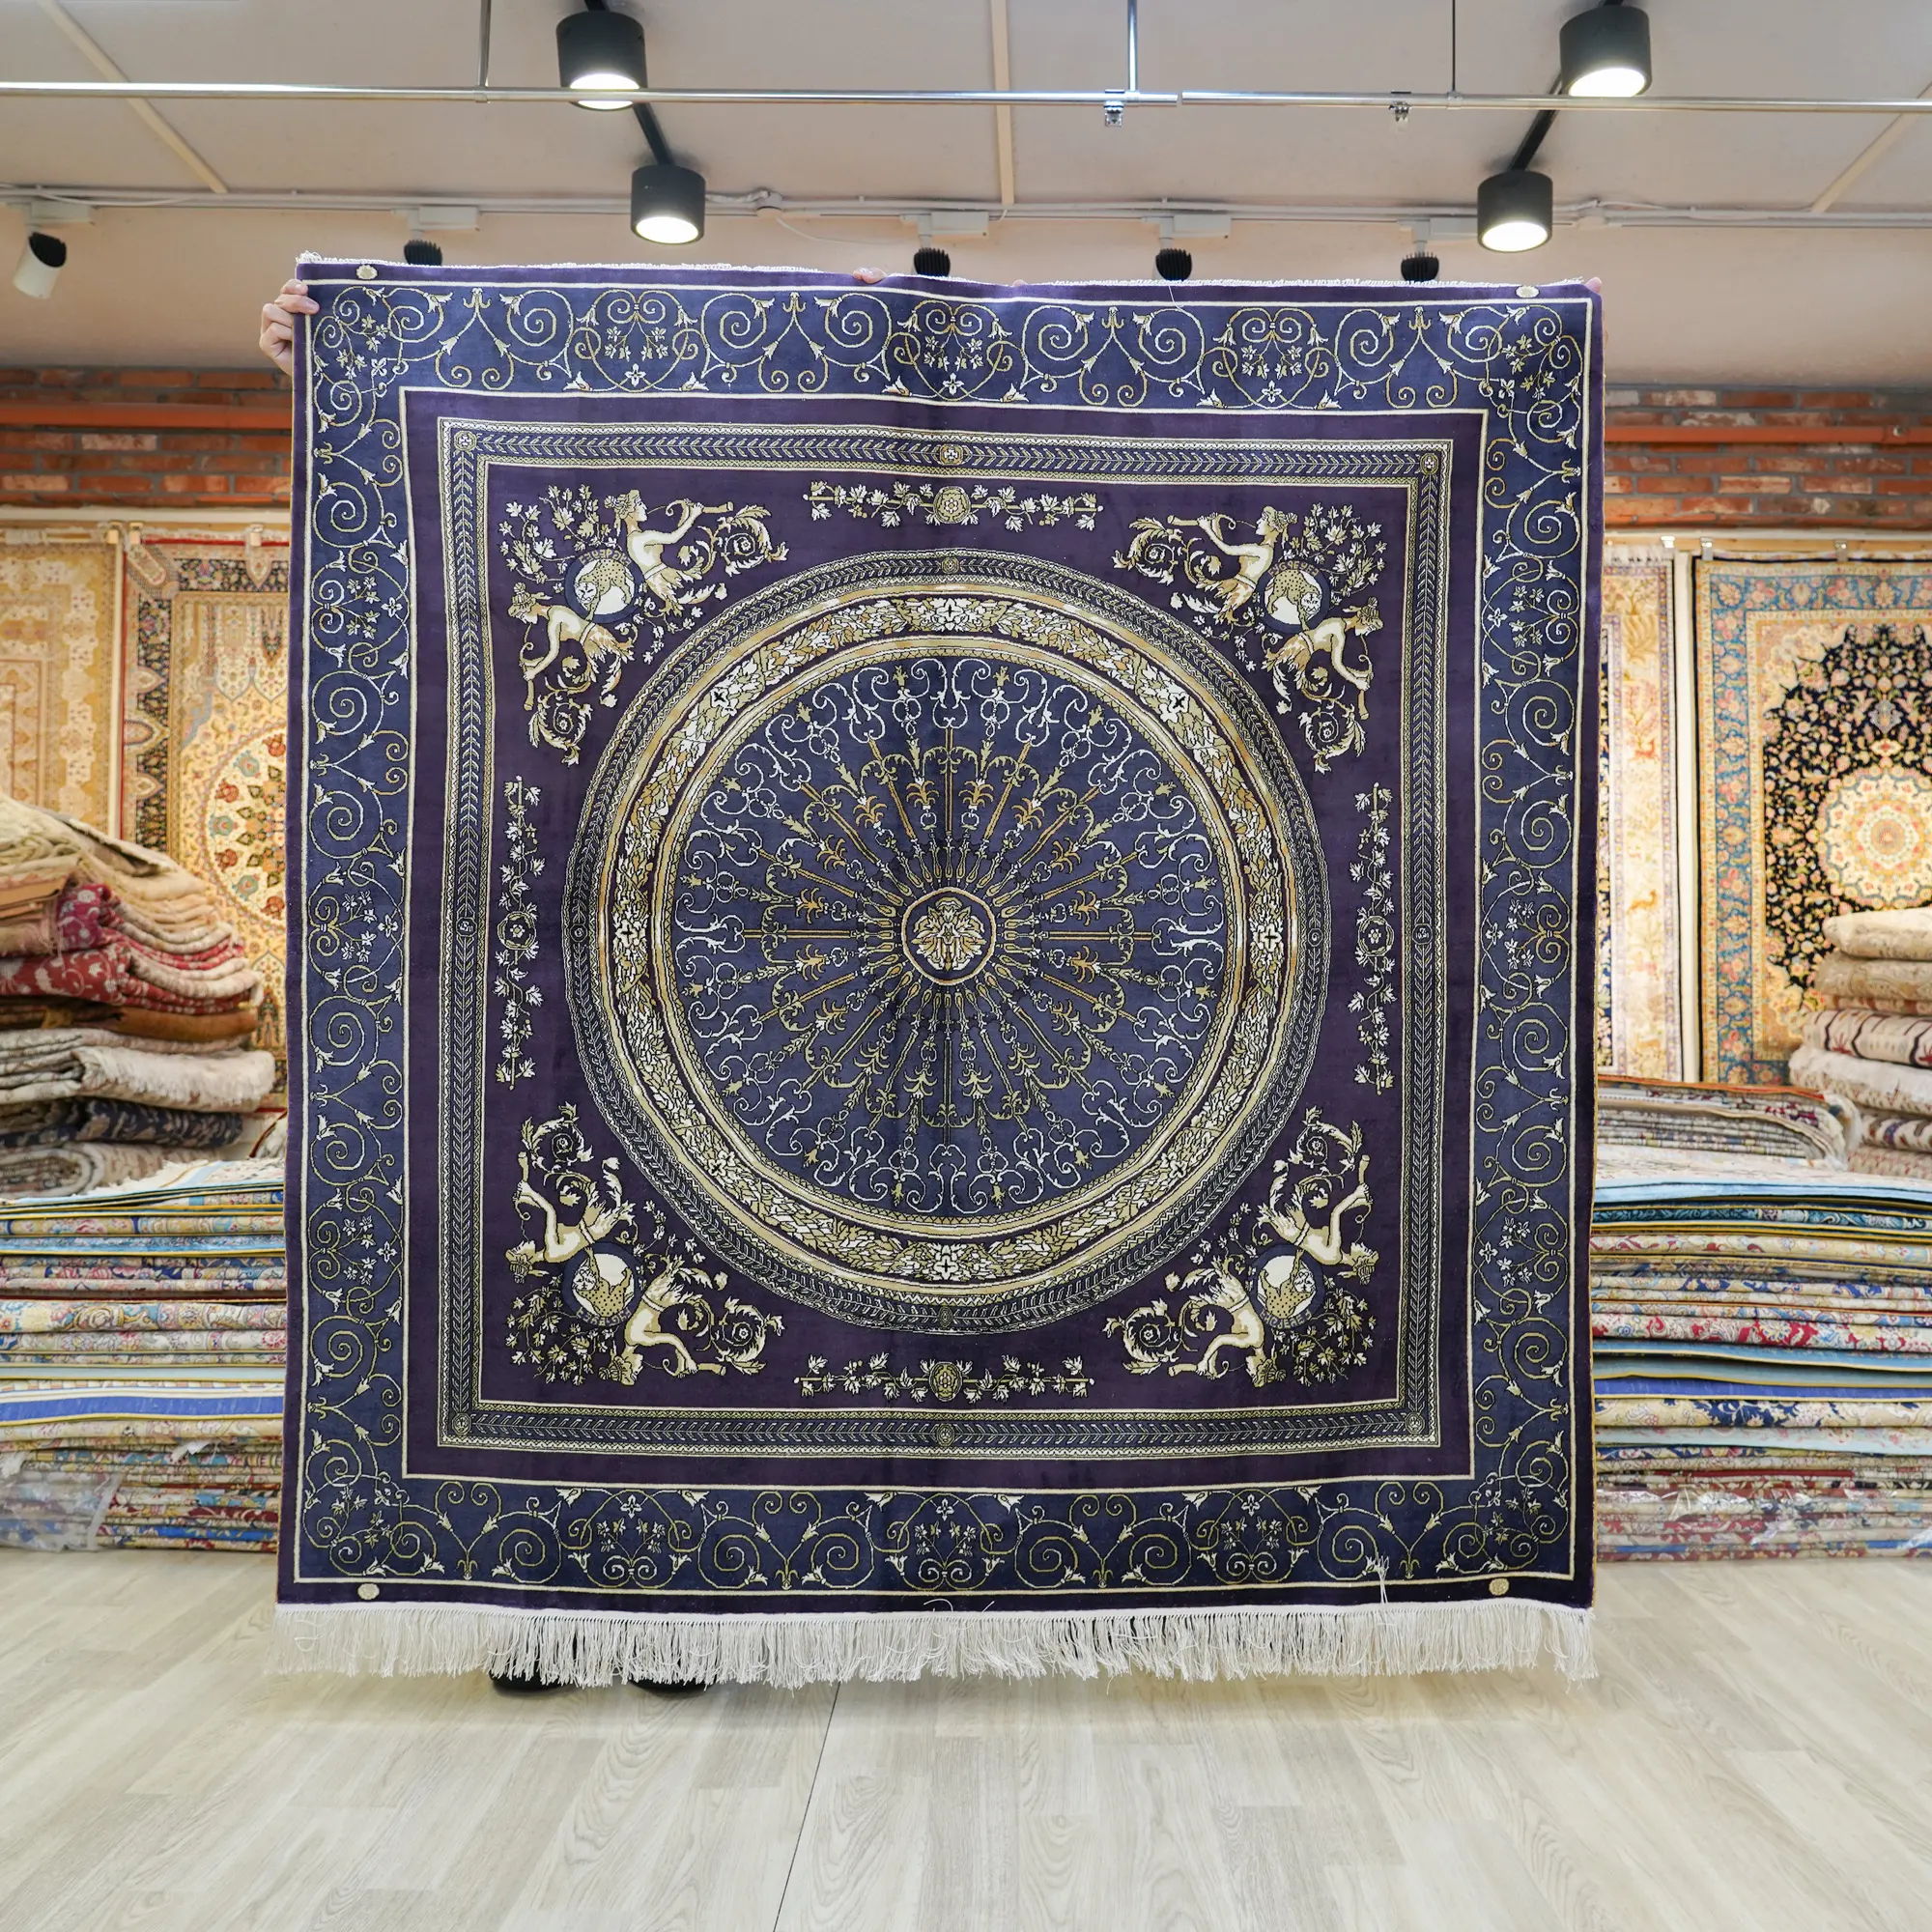 183x183cm Round Handmade Silk Carpet Turkish Rugs Luxury Home Decor Hand Knotted Rugs